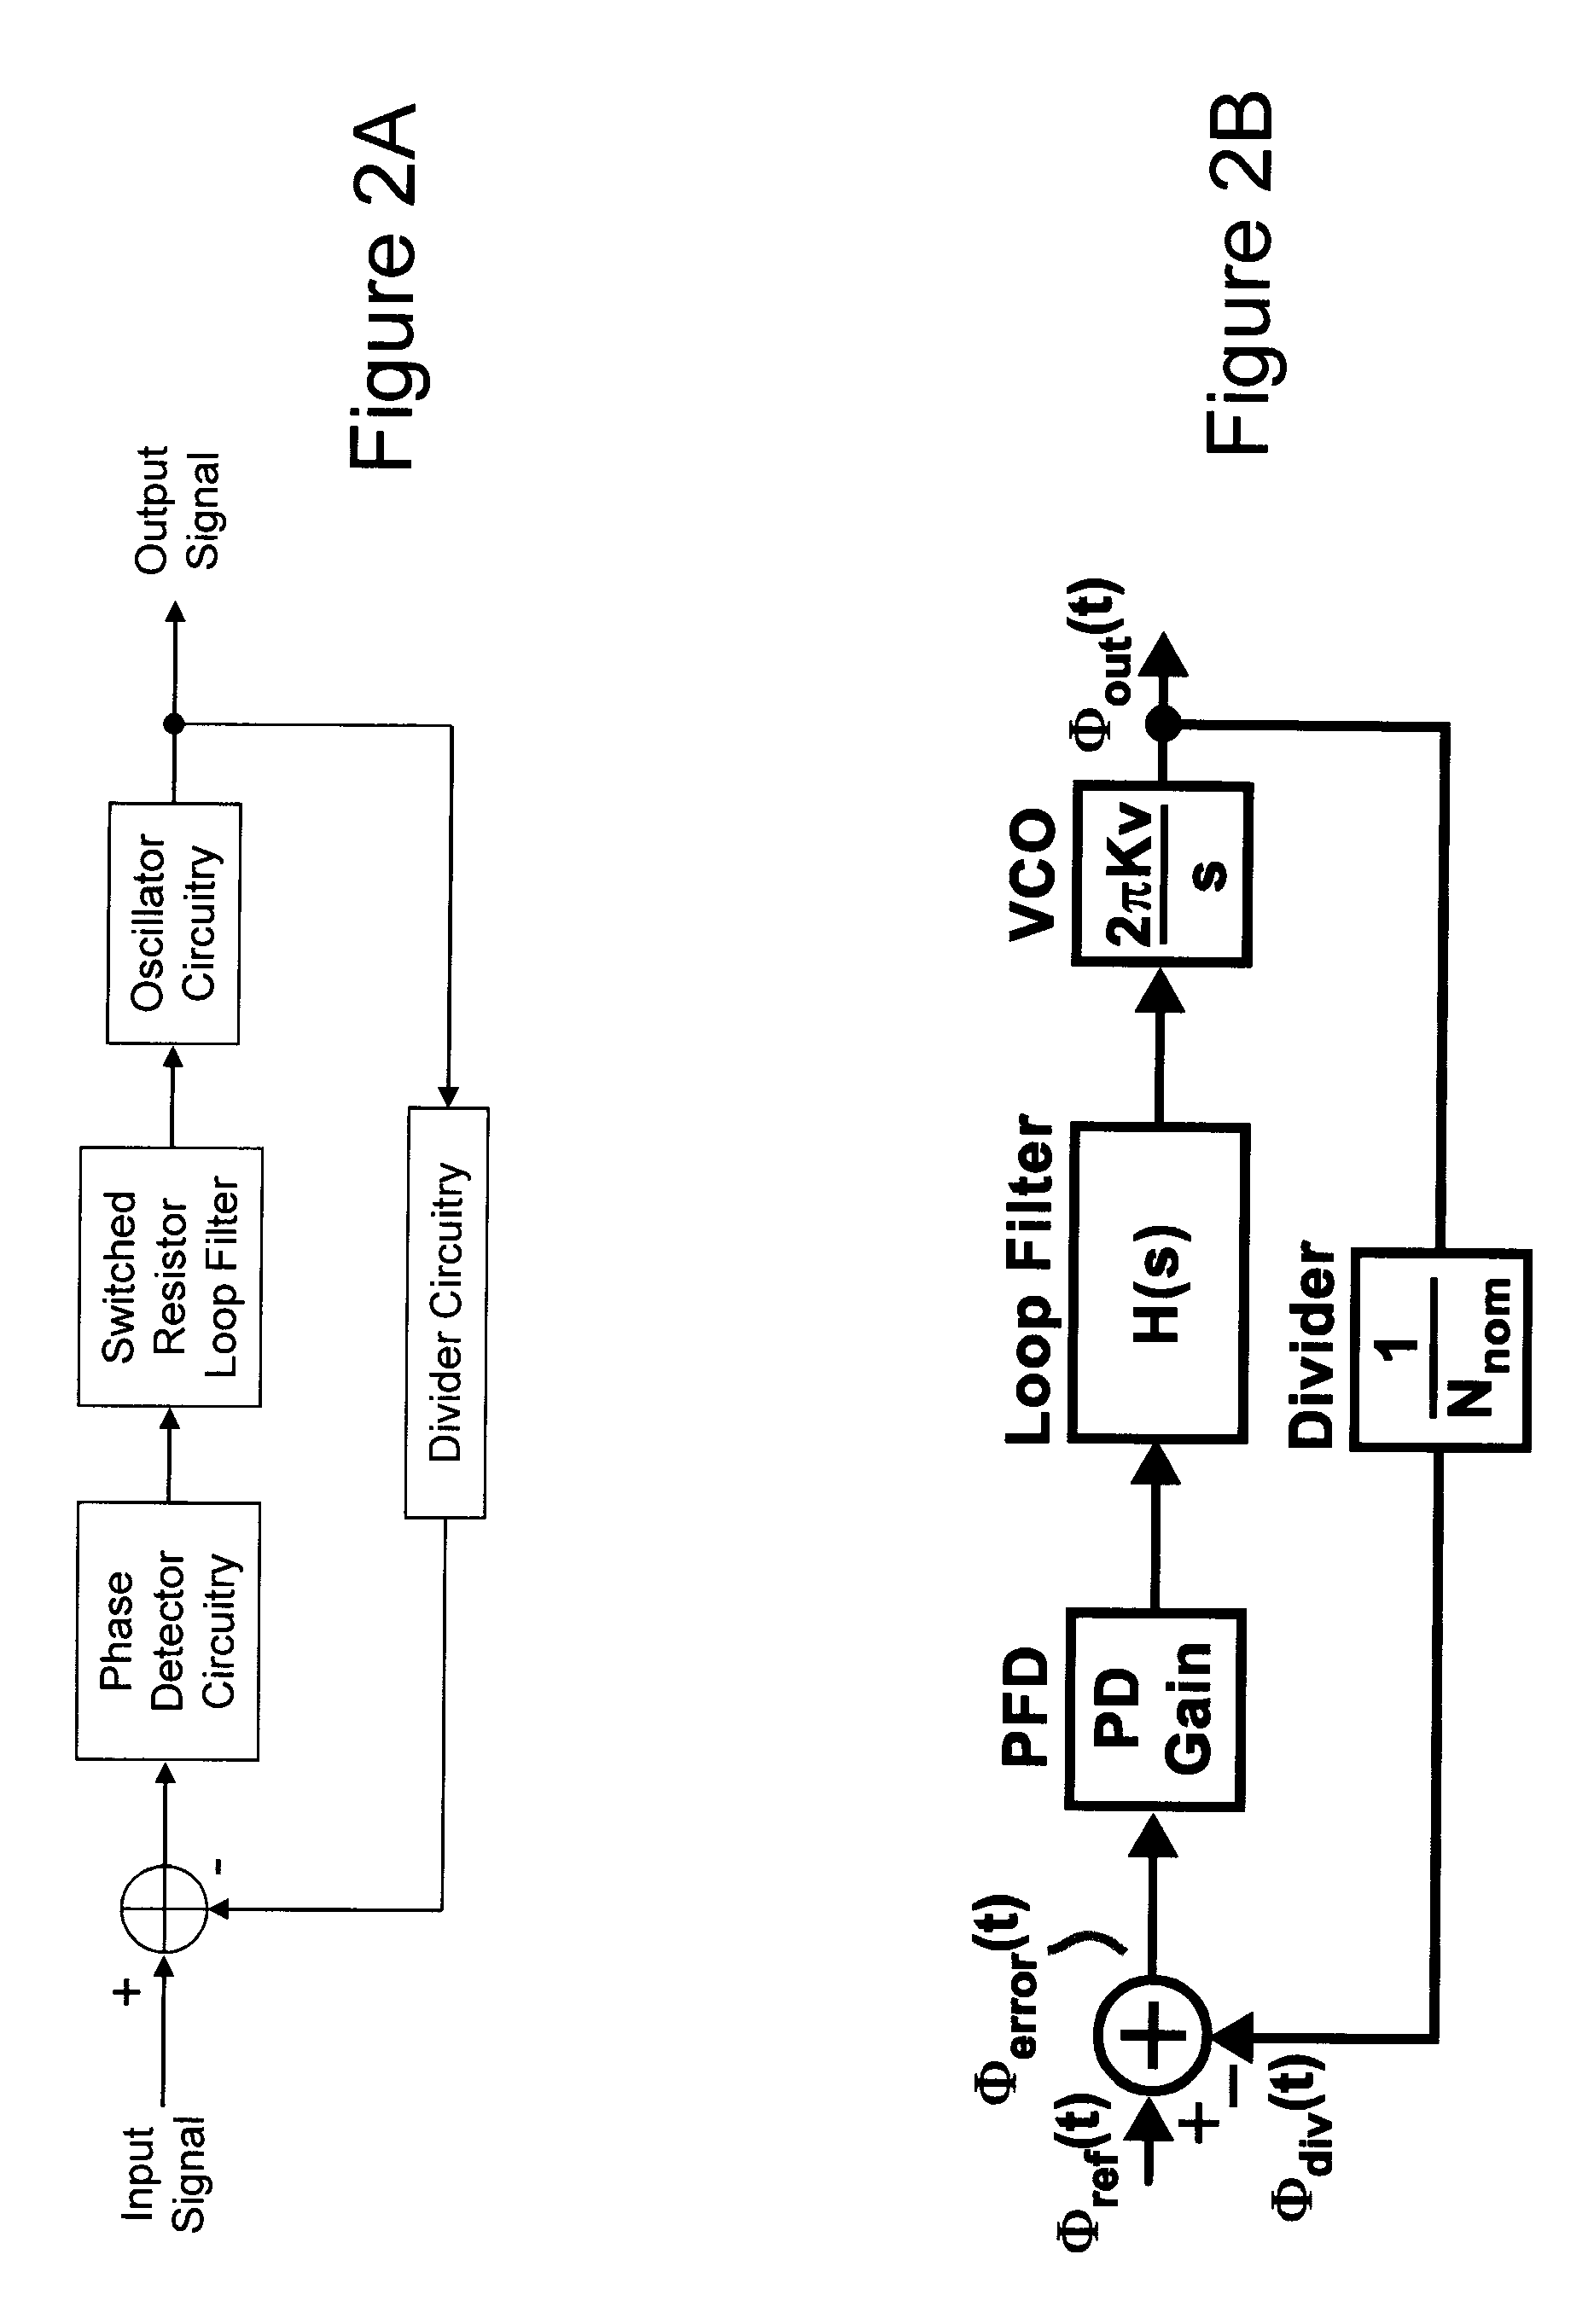 Phase locked loop circuitry having switched resistor loop filter circuitry, and methods of operating same